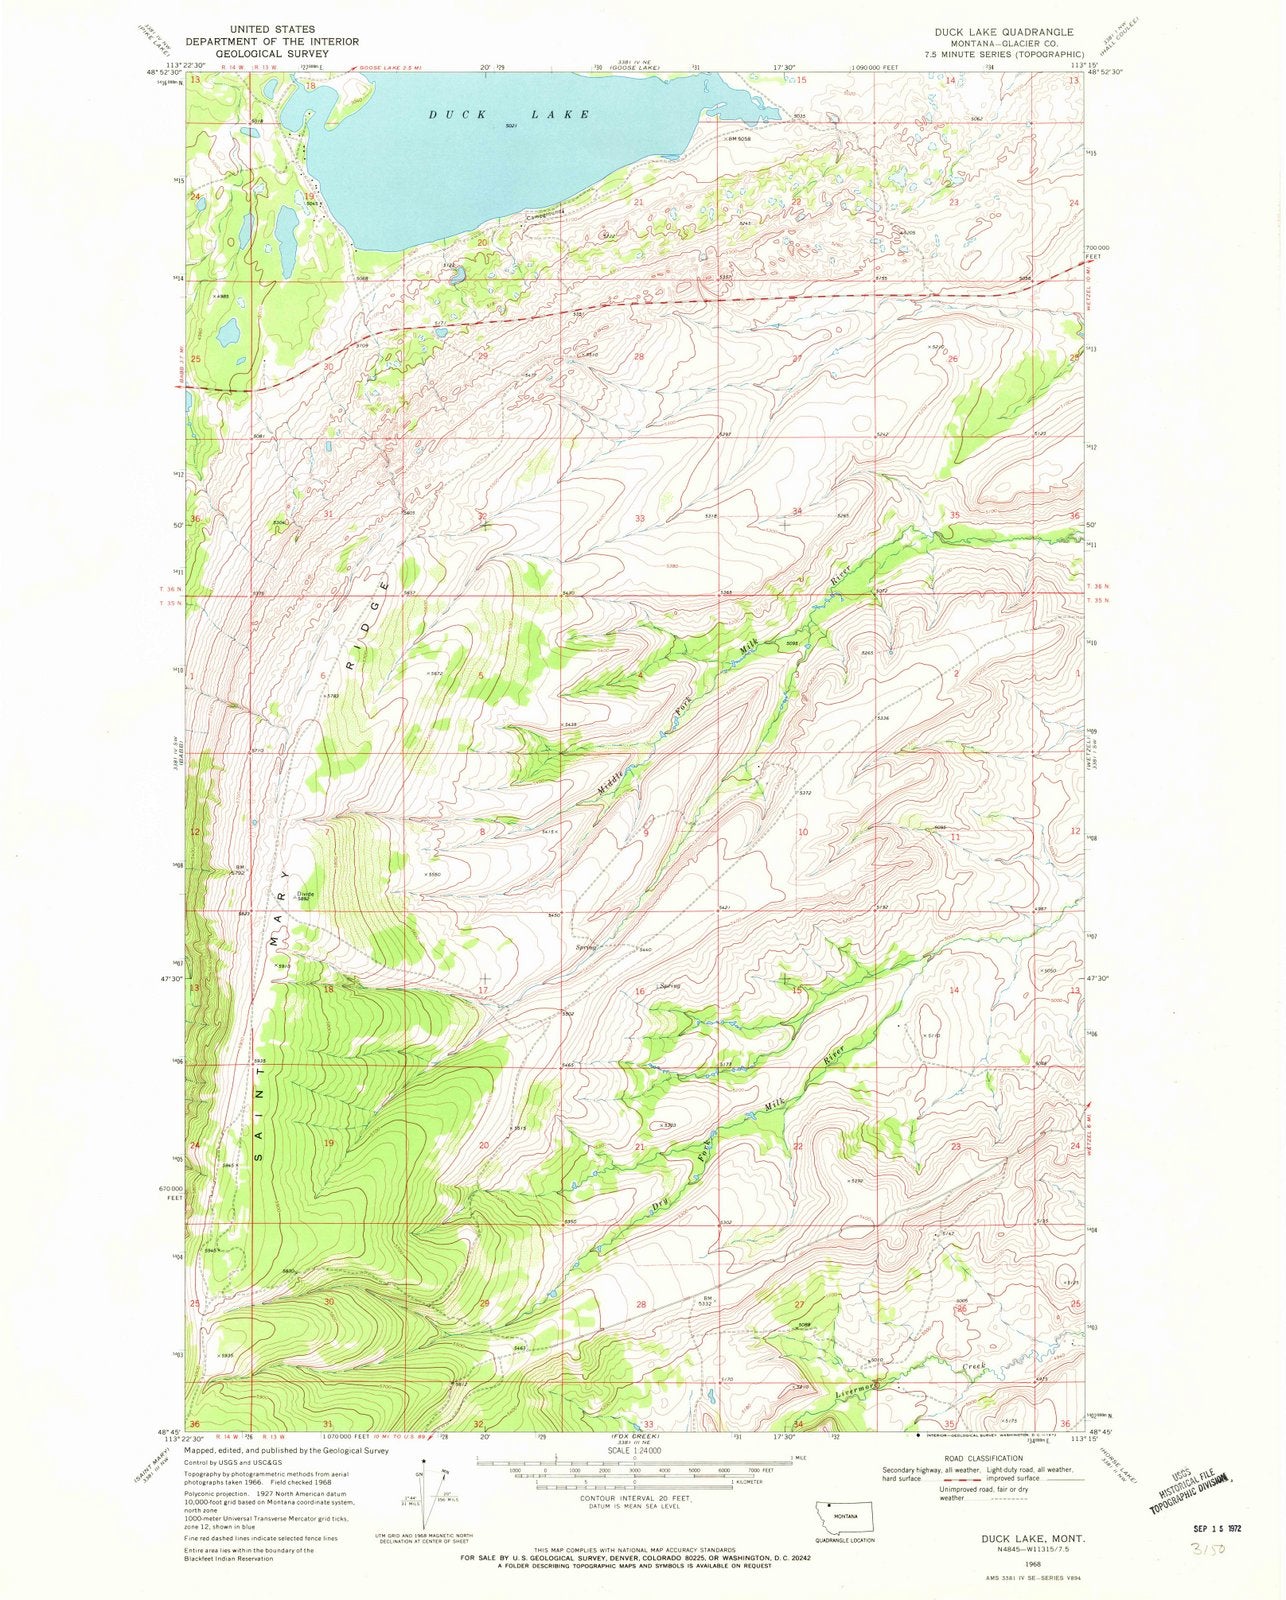 1968 Duck Lake, MT - Montana - USGS Topographic Map